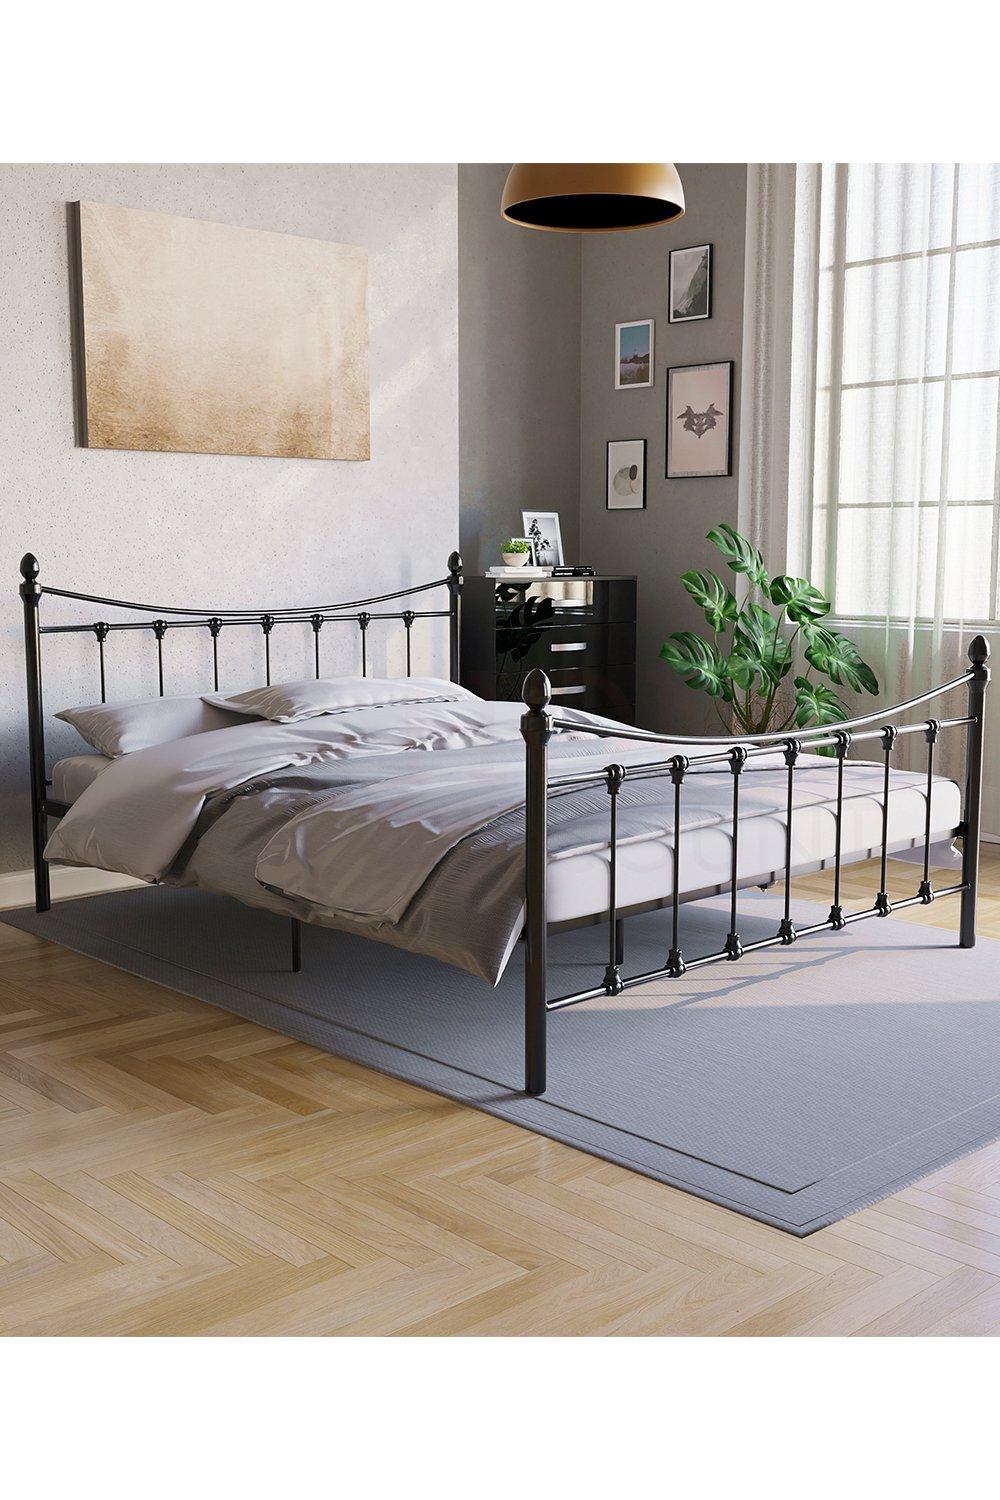 Vida Designs Paris King Size Metal Bed Frame 985 x 1590 x 2095 mm